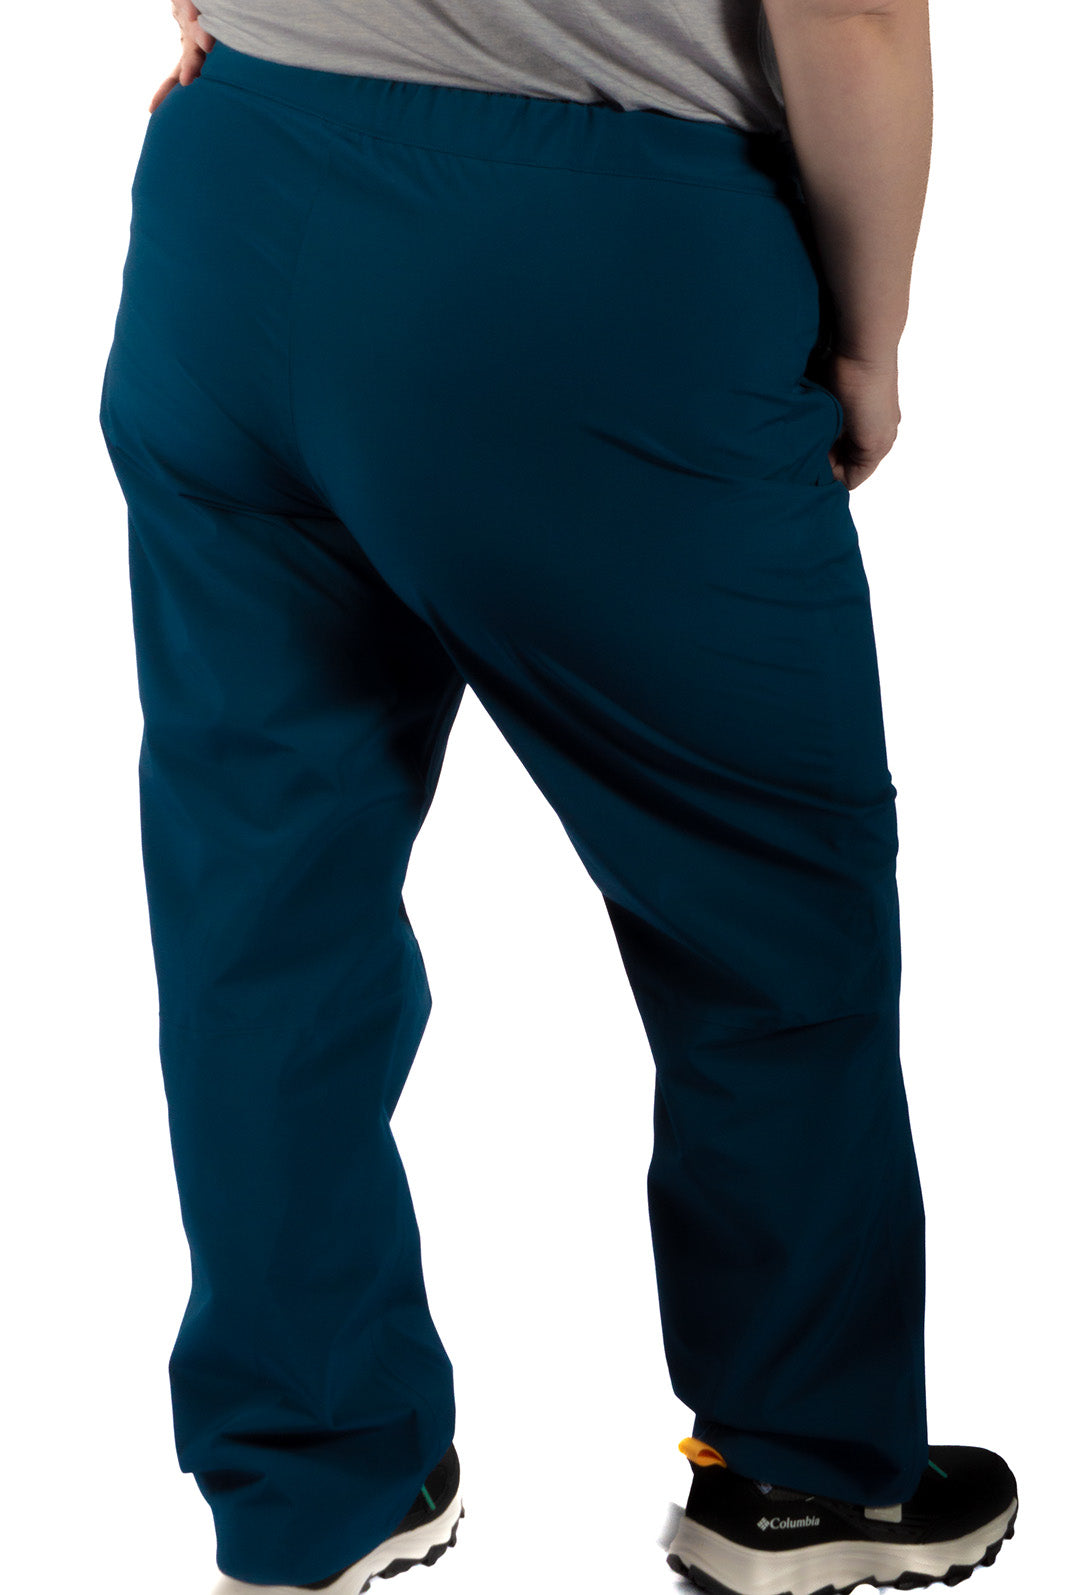 Pantalon Impermeable Respirant Performant Sealed PIII Taille Plus de Sportive Plus